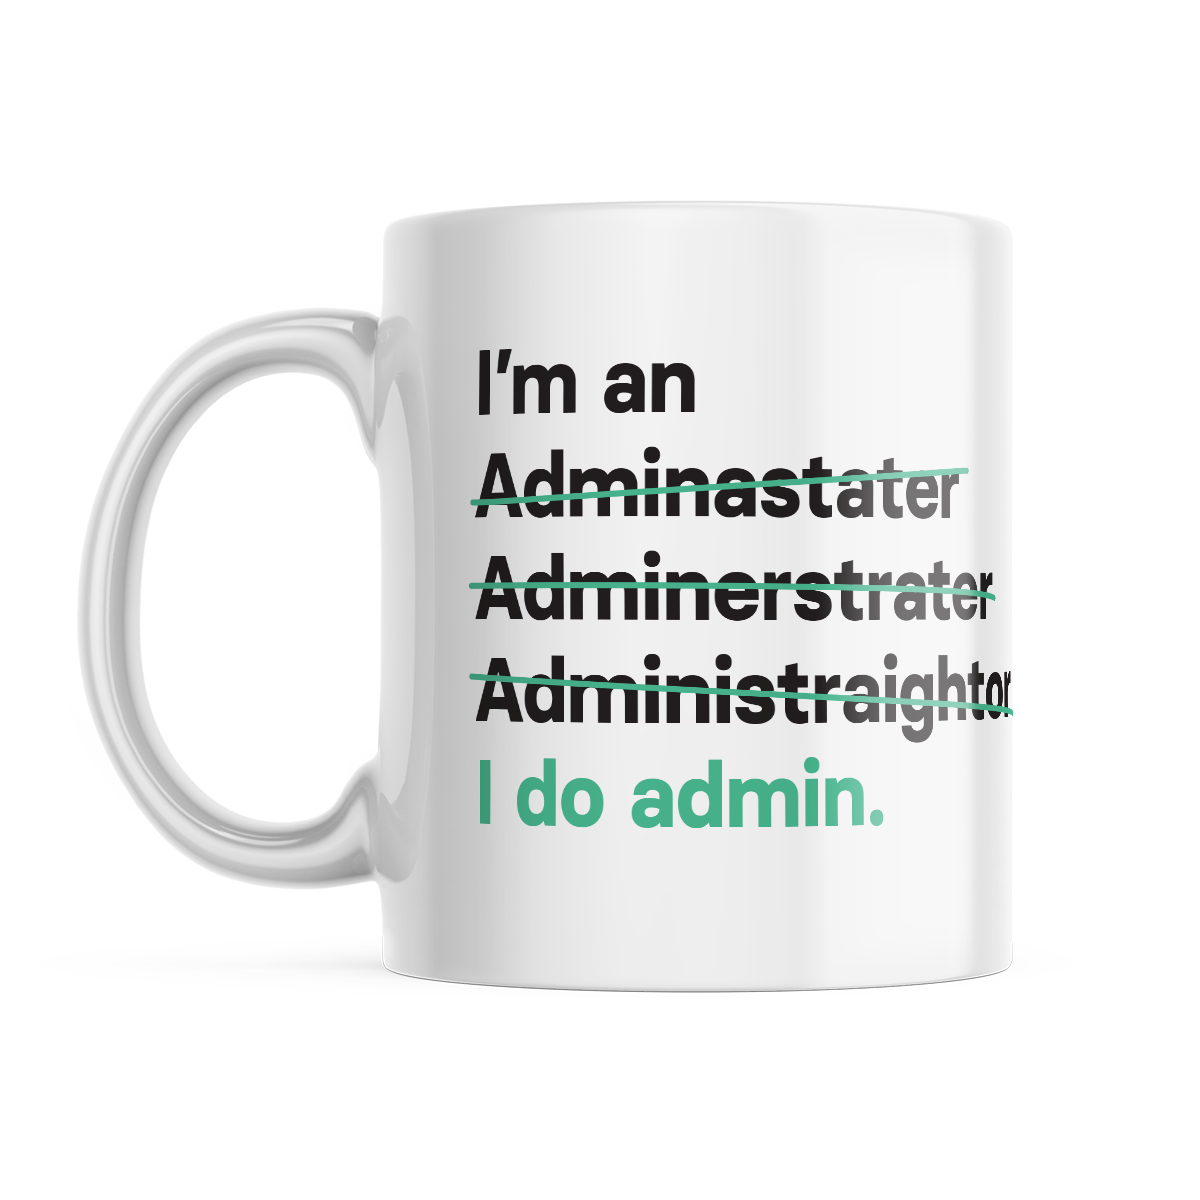 I'm an Administrator